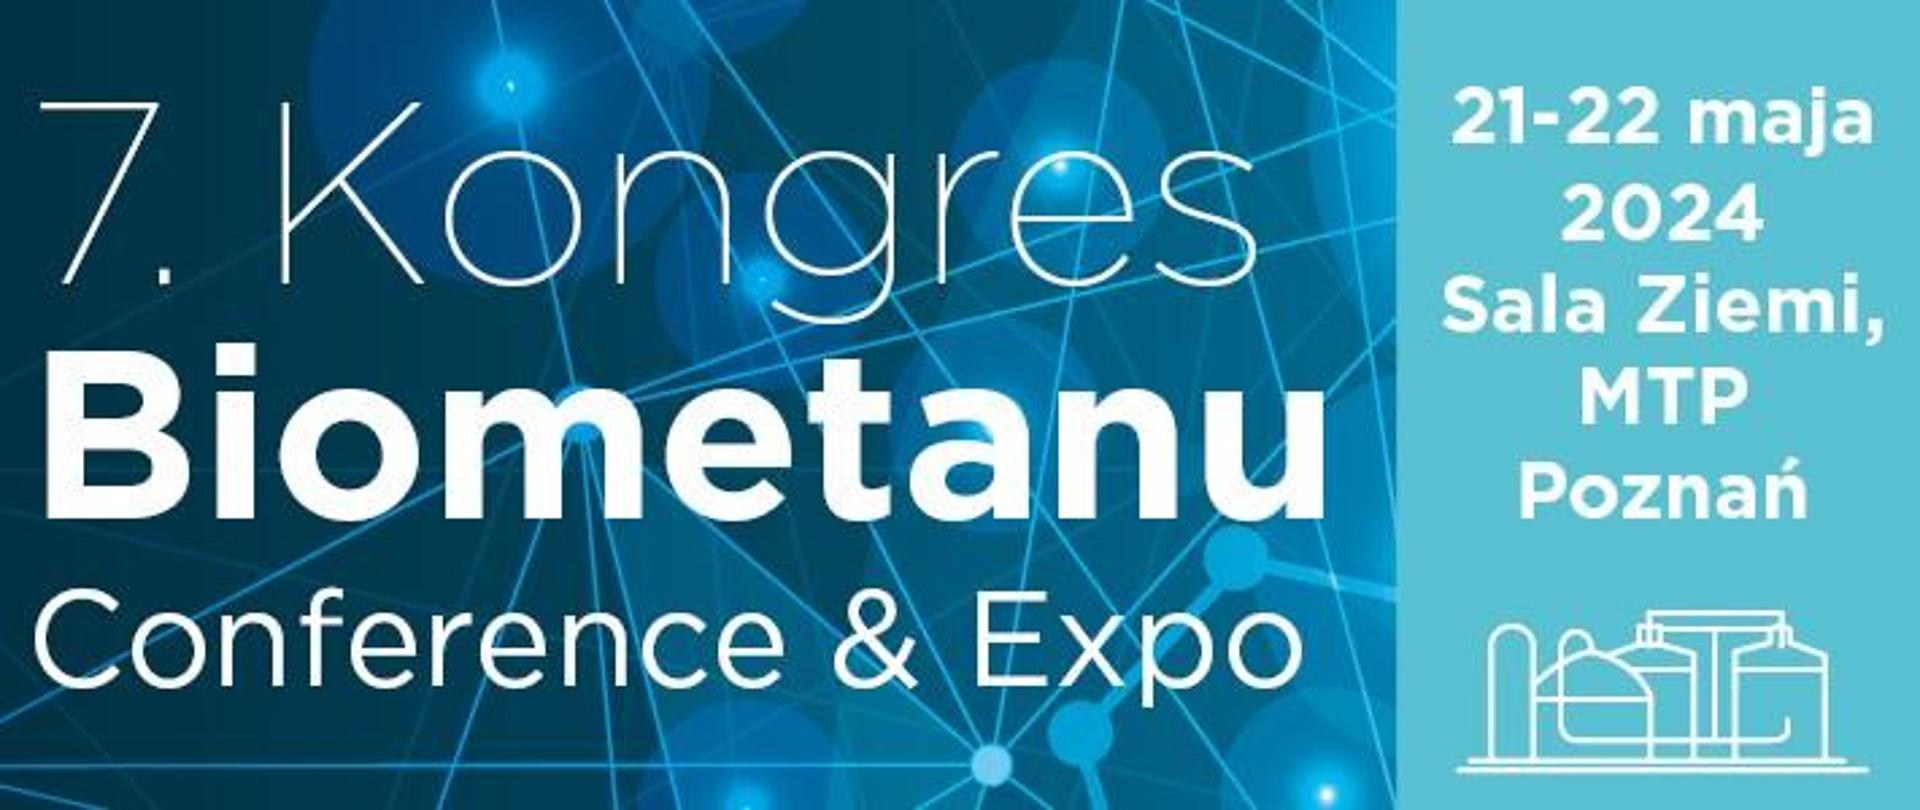 7 Kongres Biometanu Conference & Expo 21-22 maja 2024 Sala Ziemi, MTP Poznań